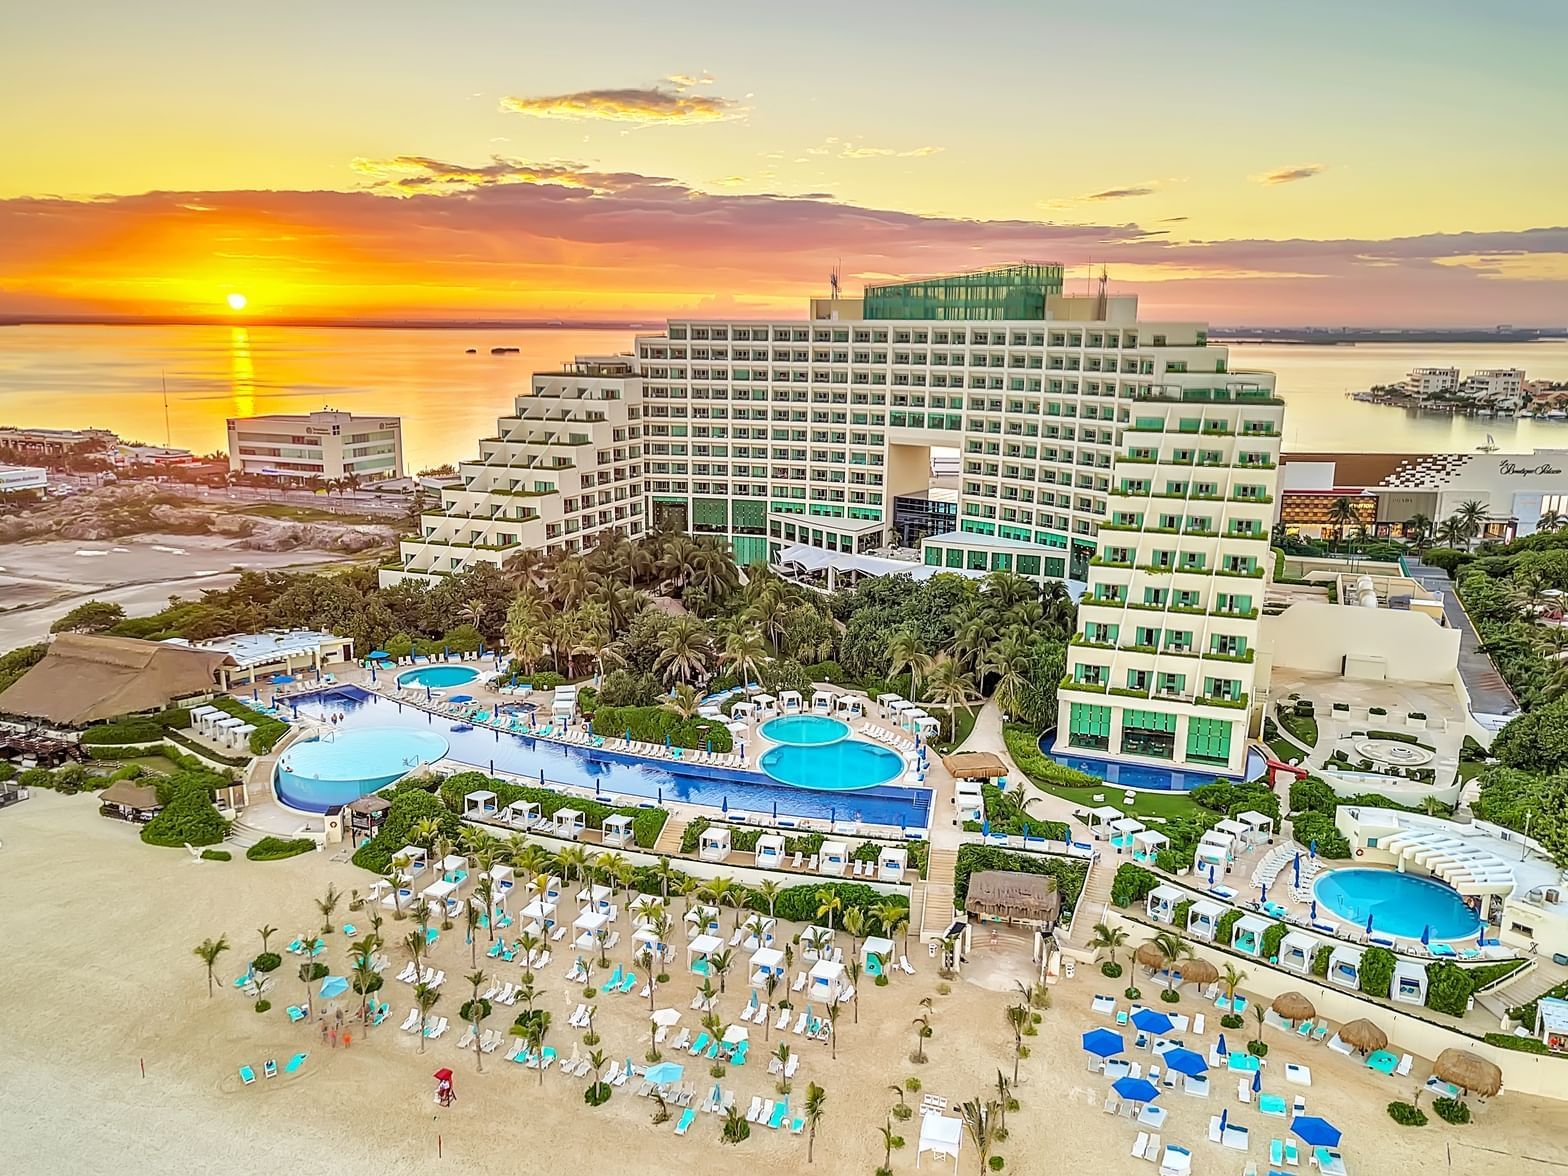 Aerial view of the hotel & pool area at La Colección Resorts